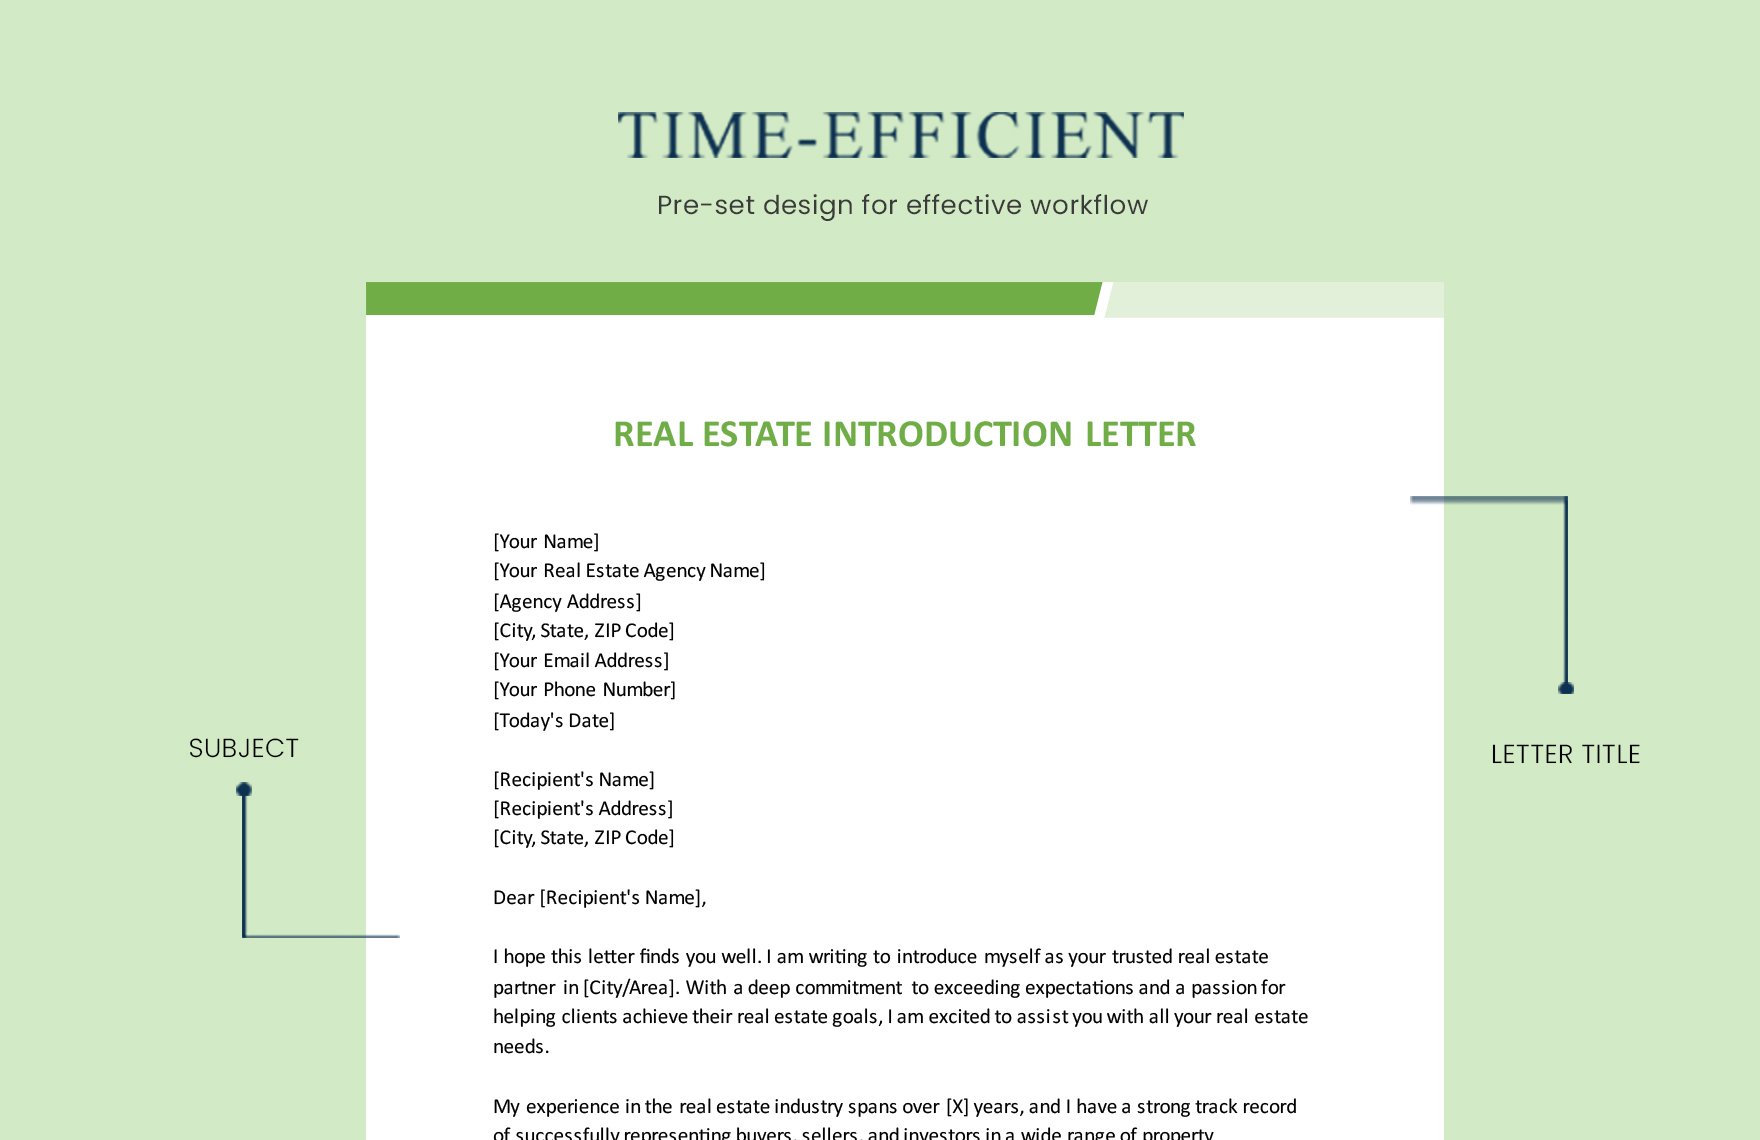 Real Estate Introduction Letter